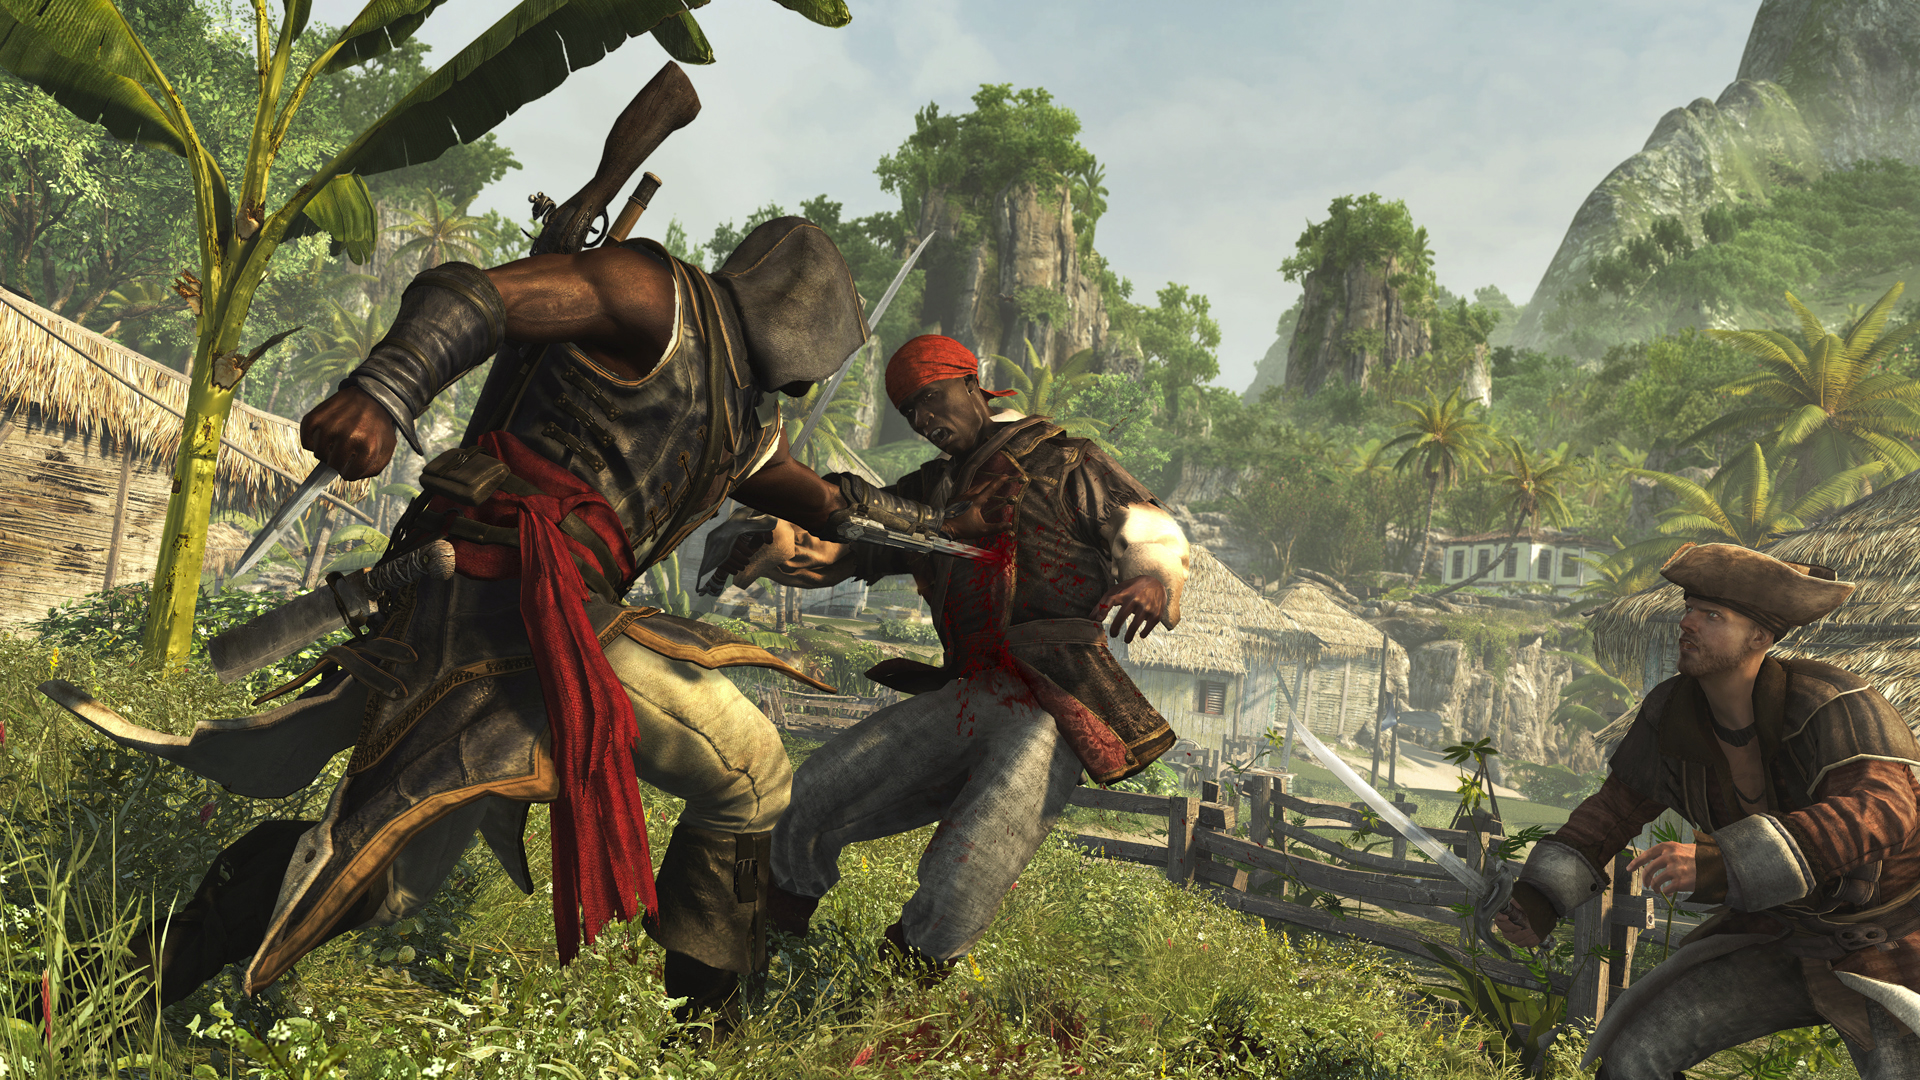 Amazoncom: Assassins Creed IV Black Flag - Playstation 3